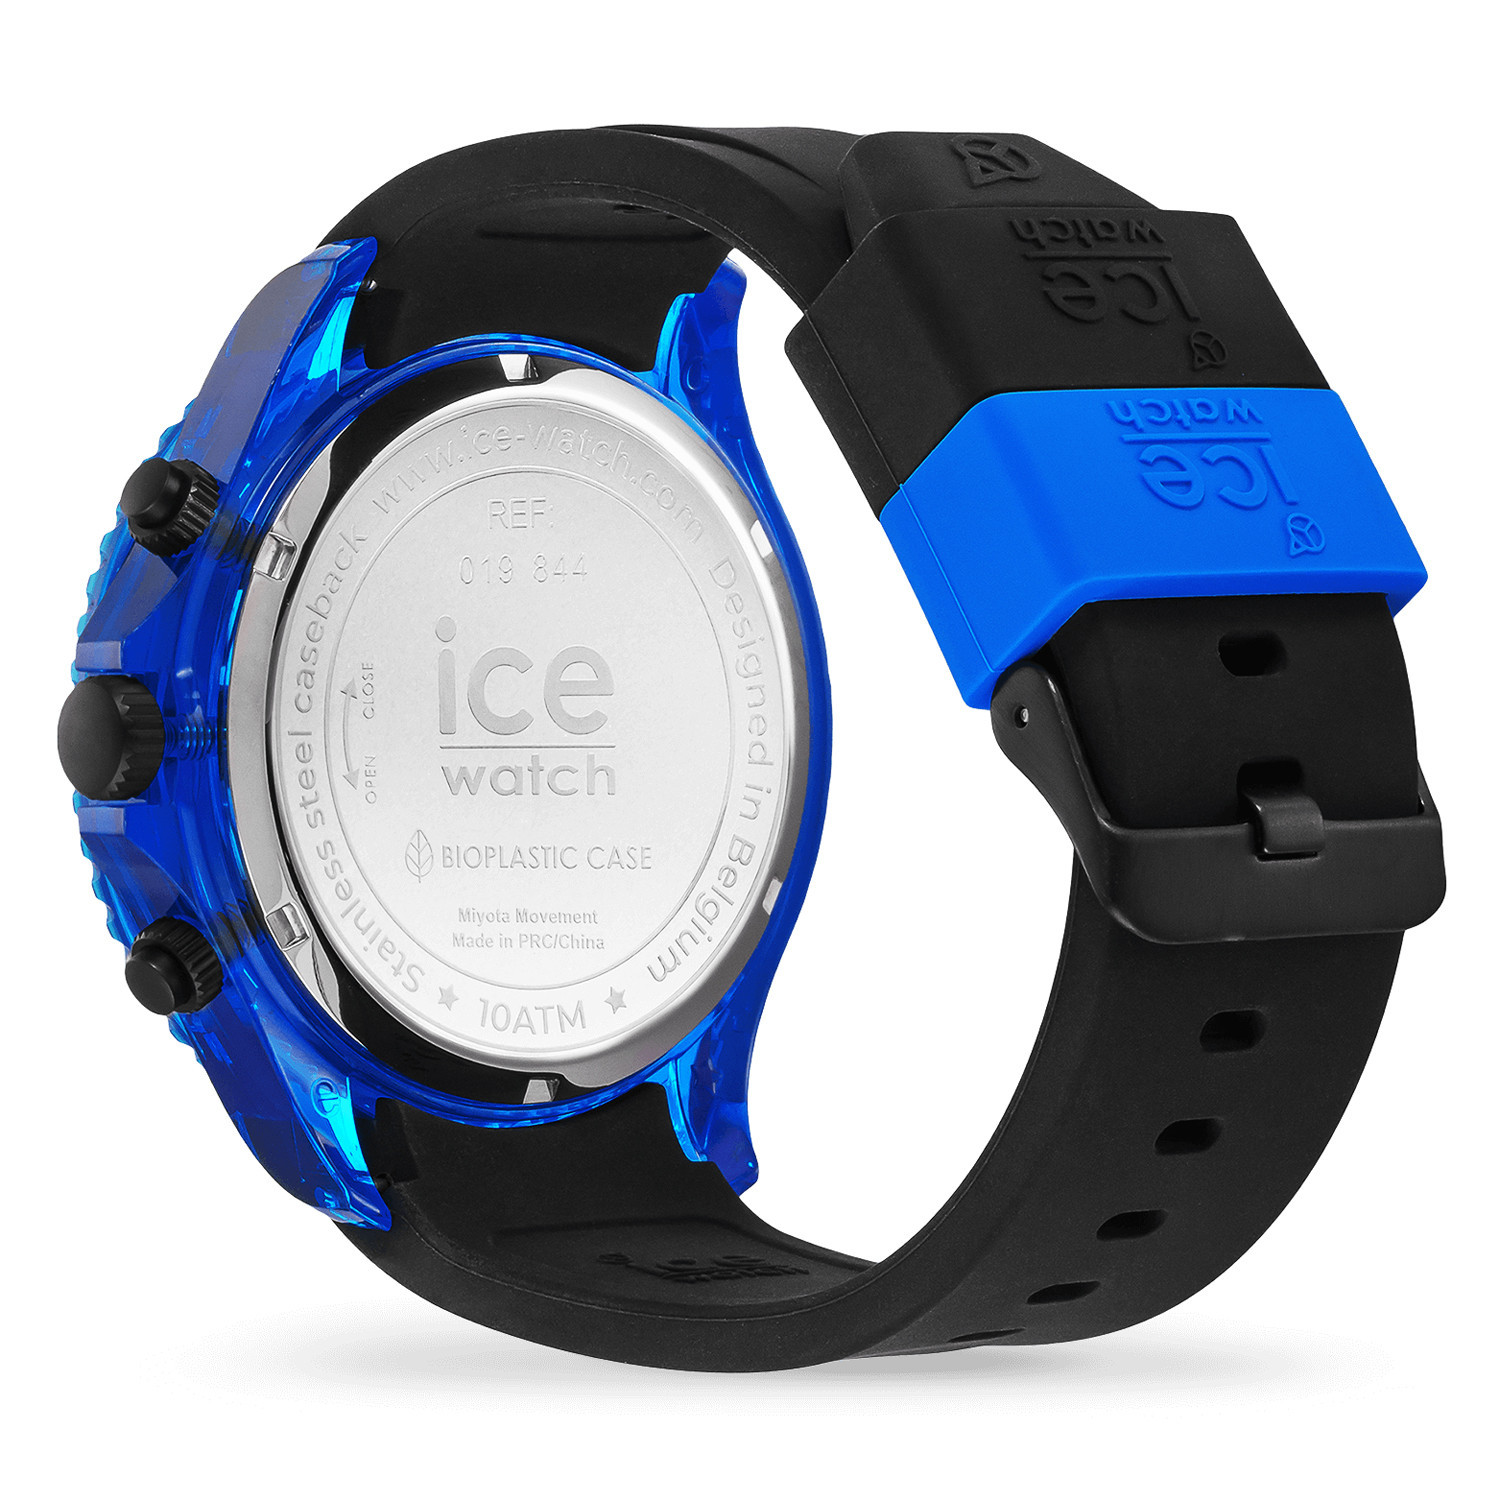 Montre Ice Watch chrono Black Blue extra large